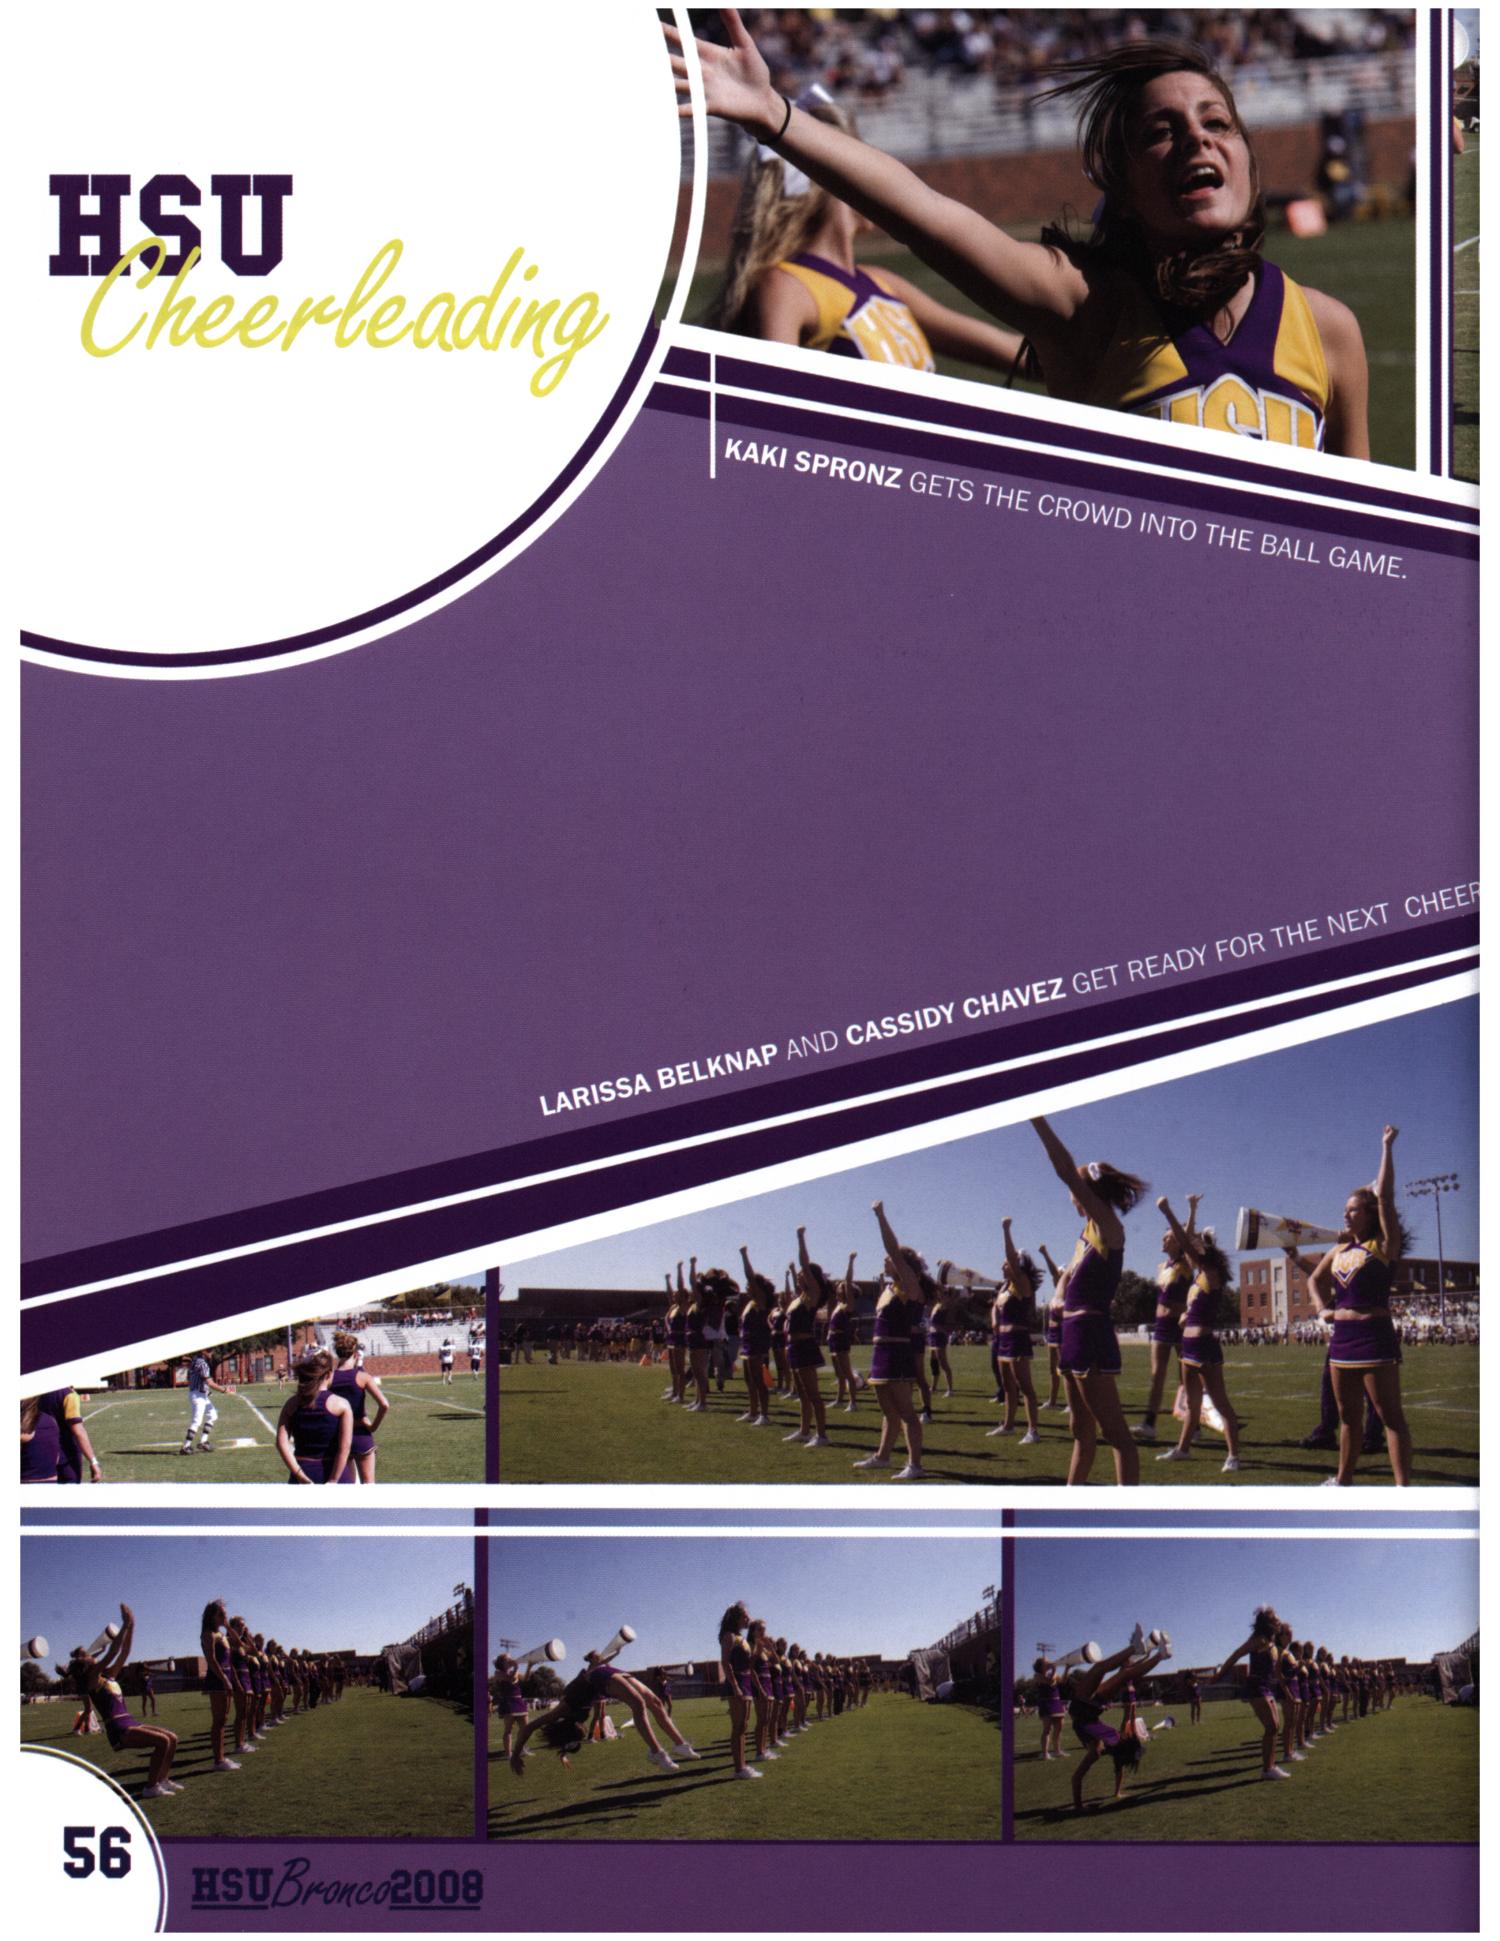 The Bronco, Yearbook of Hardin-Simmons University, 2008
                                                
                                                    56
                                                